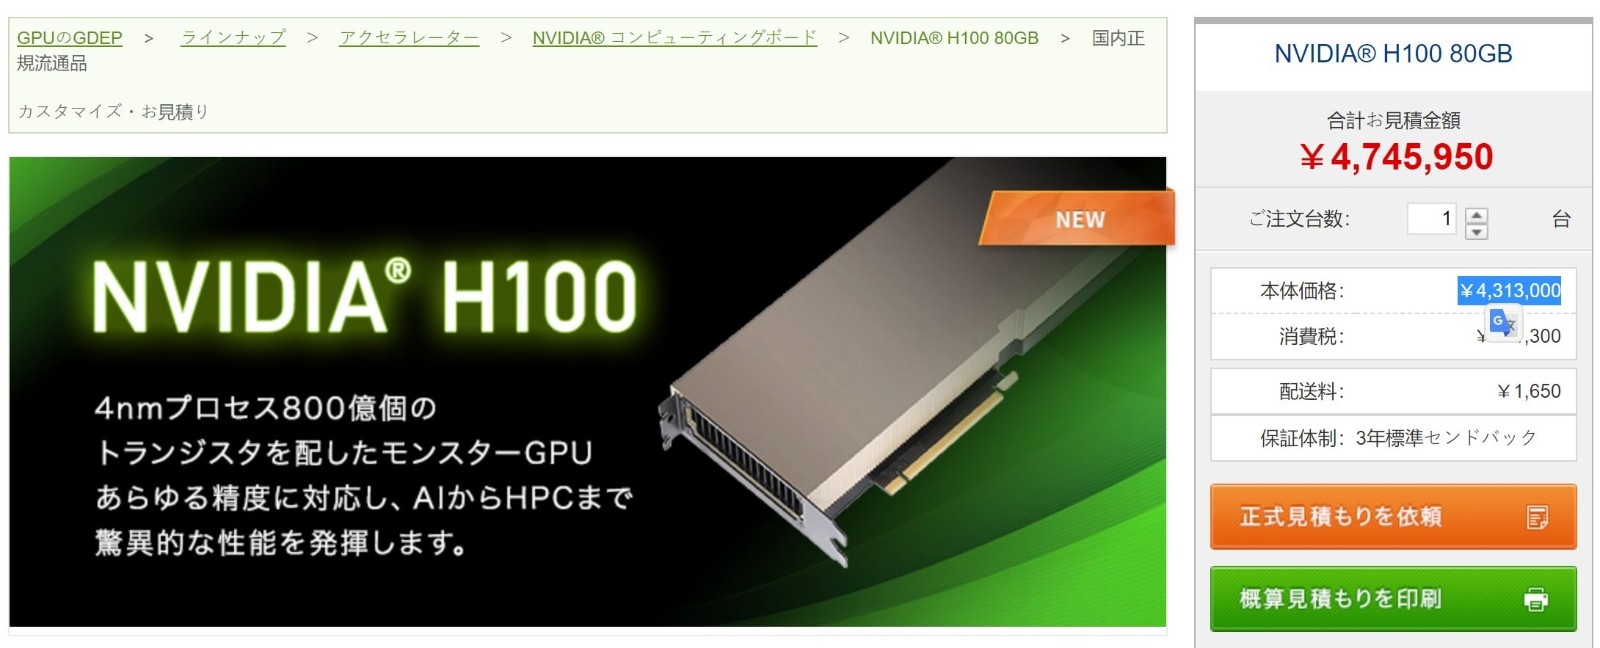 80G显存 NVIDIA H100 Hopper加速计算卡上市